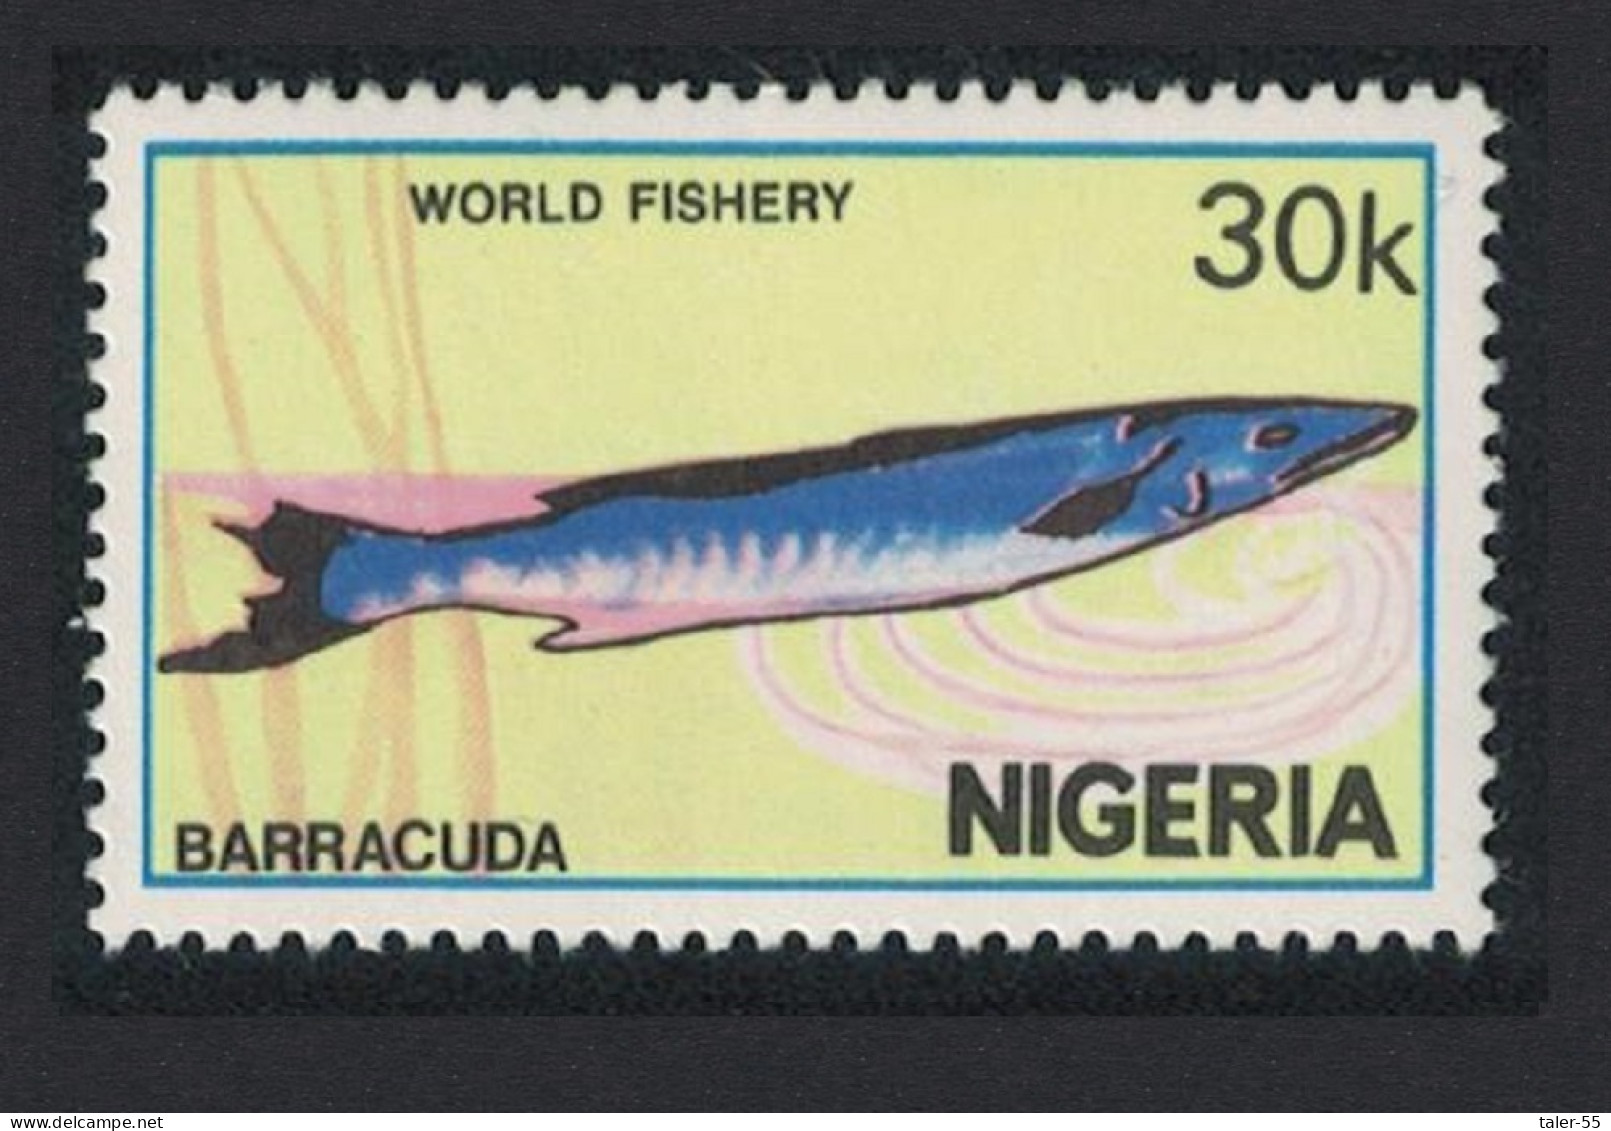 Nigeria Barracuda Fish 1983 MNH SG#461 - Nigeria (1961-...)